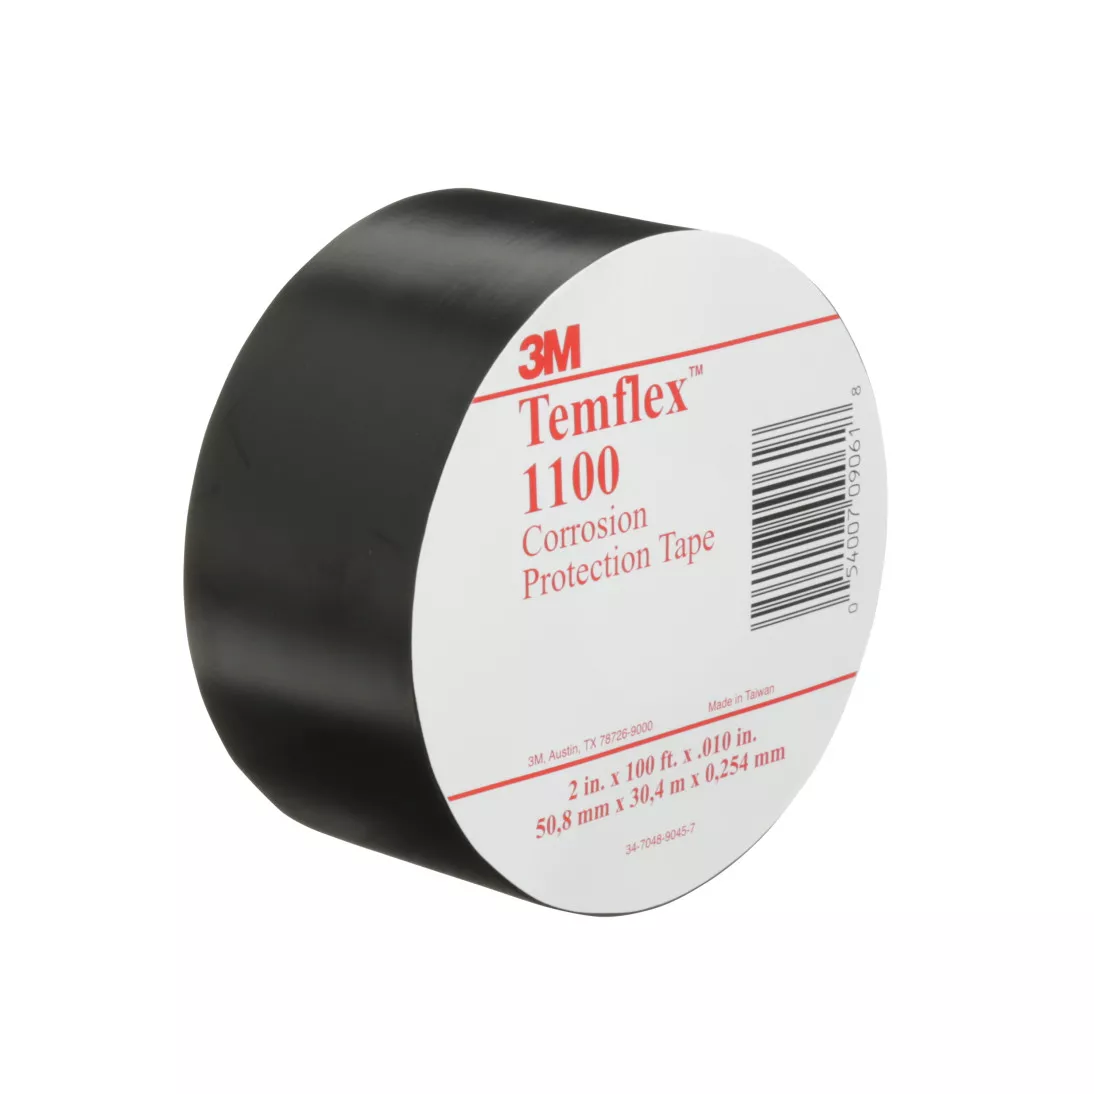 3M™ Temflex™ Vinyl Corrosion Protection Tape 1100, 2 in x 100 ft,
Printed, Black, 4 rolls/carton, 24 rolls/Case